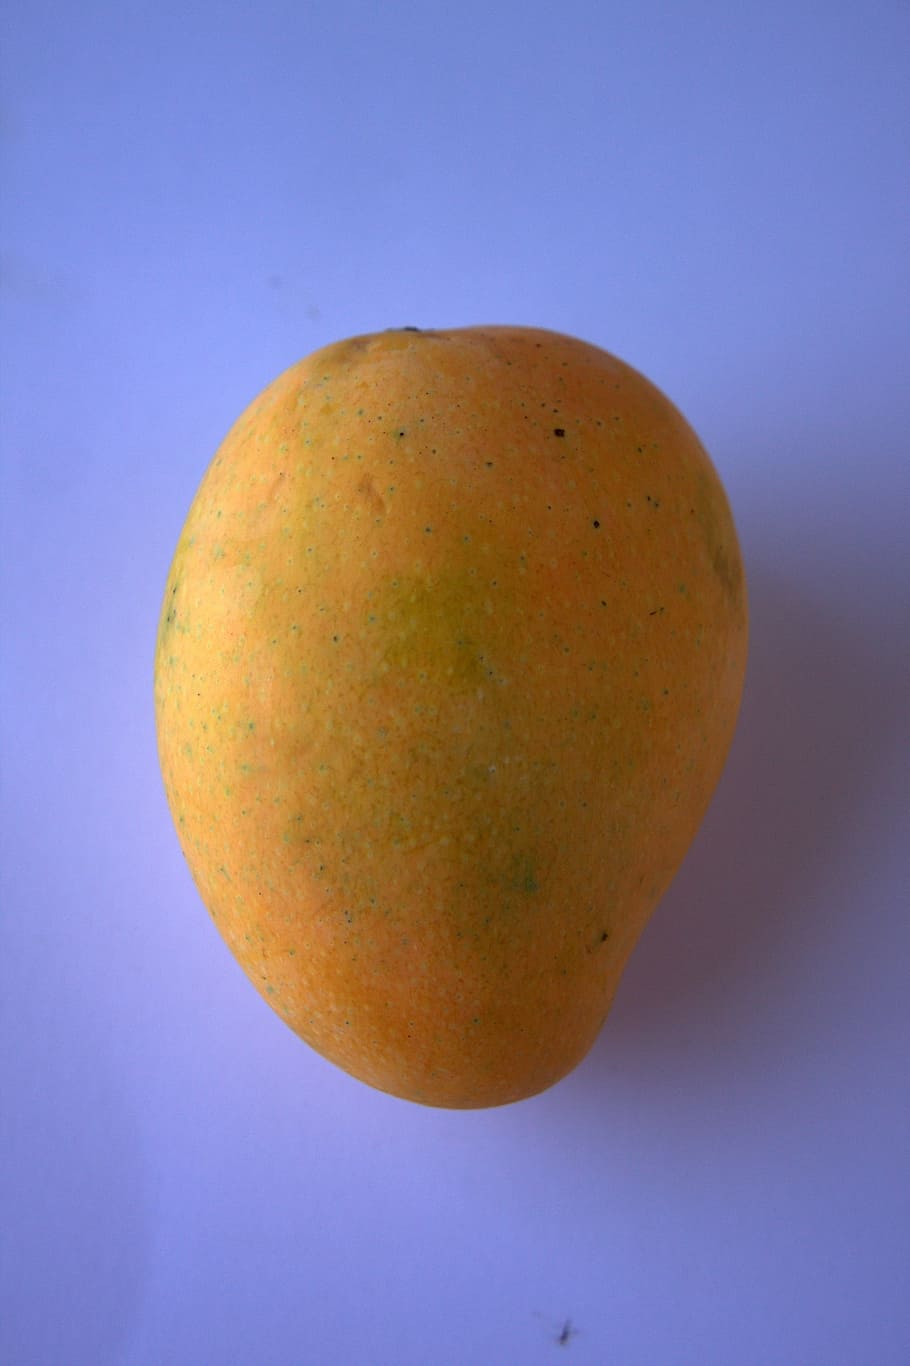 alphonso mango, mangoes, sweet, tasty, yellow, fruit, diet